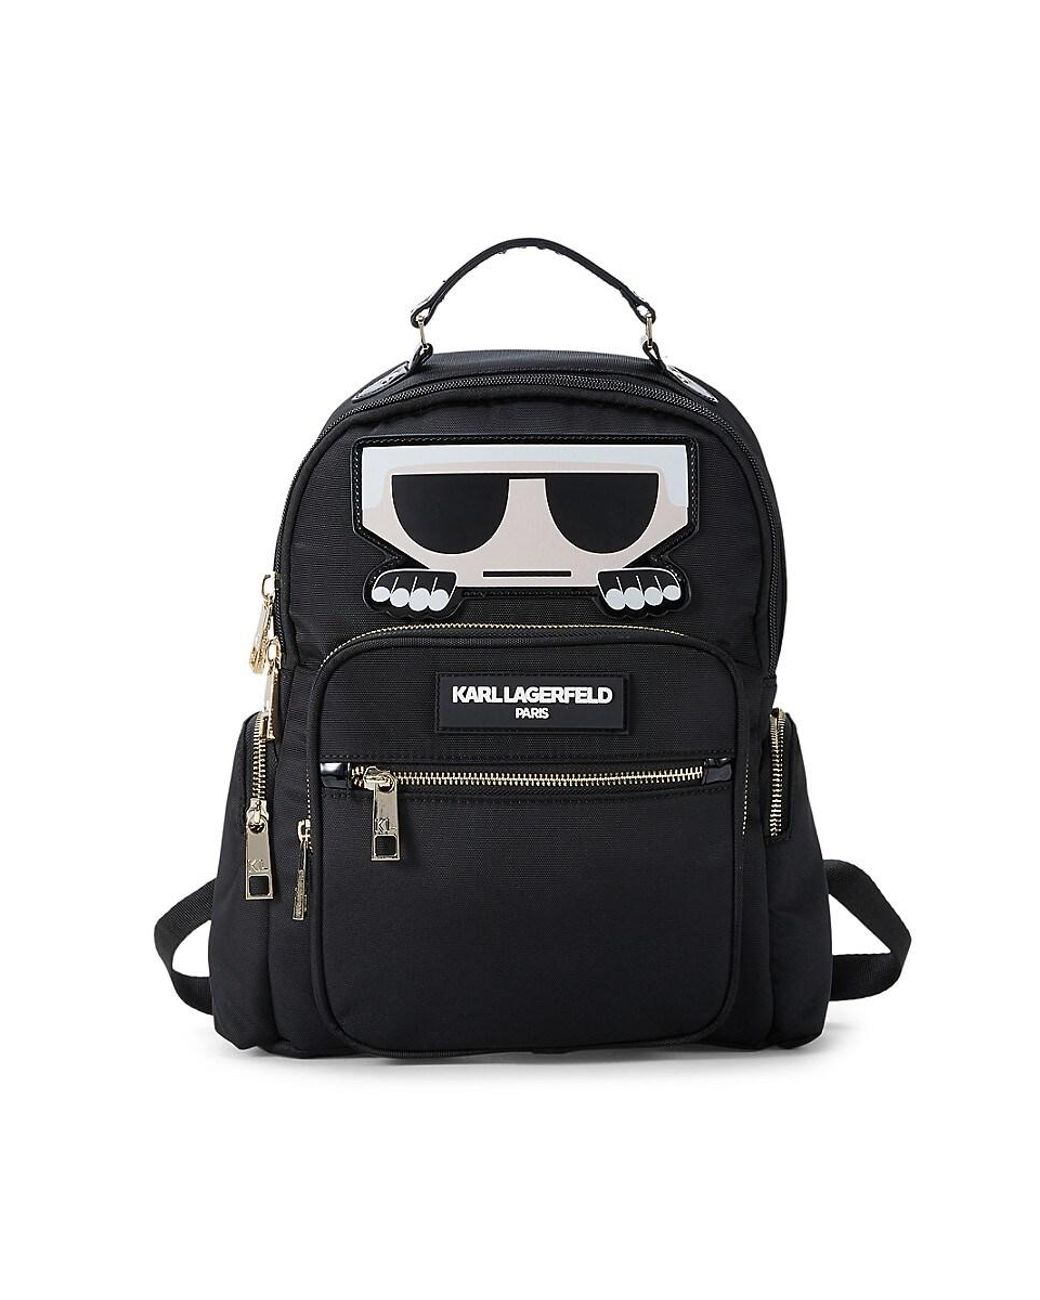 Karl Lagerfeld | Bags | Karl Lagerfeld Backpack | Poshmark